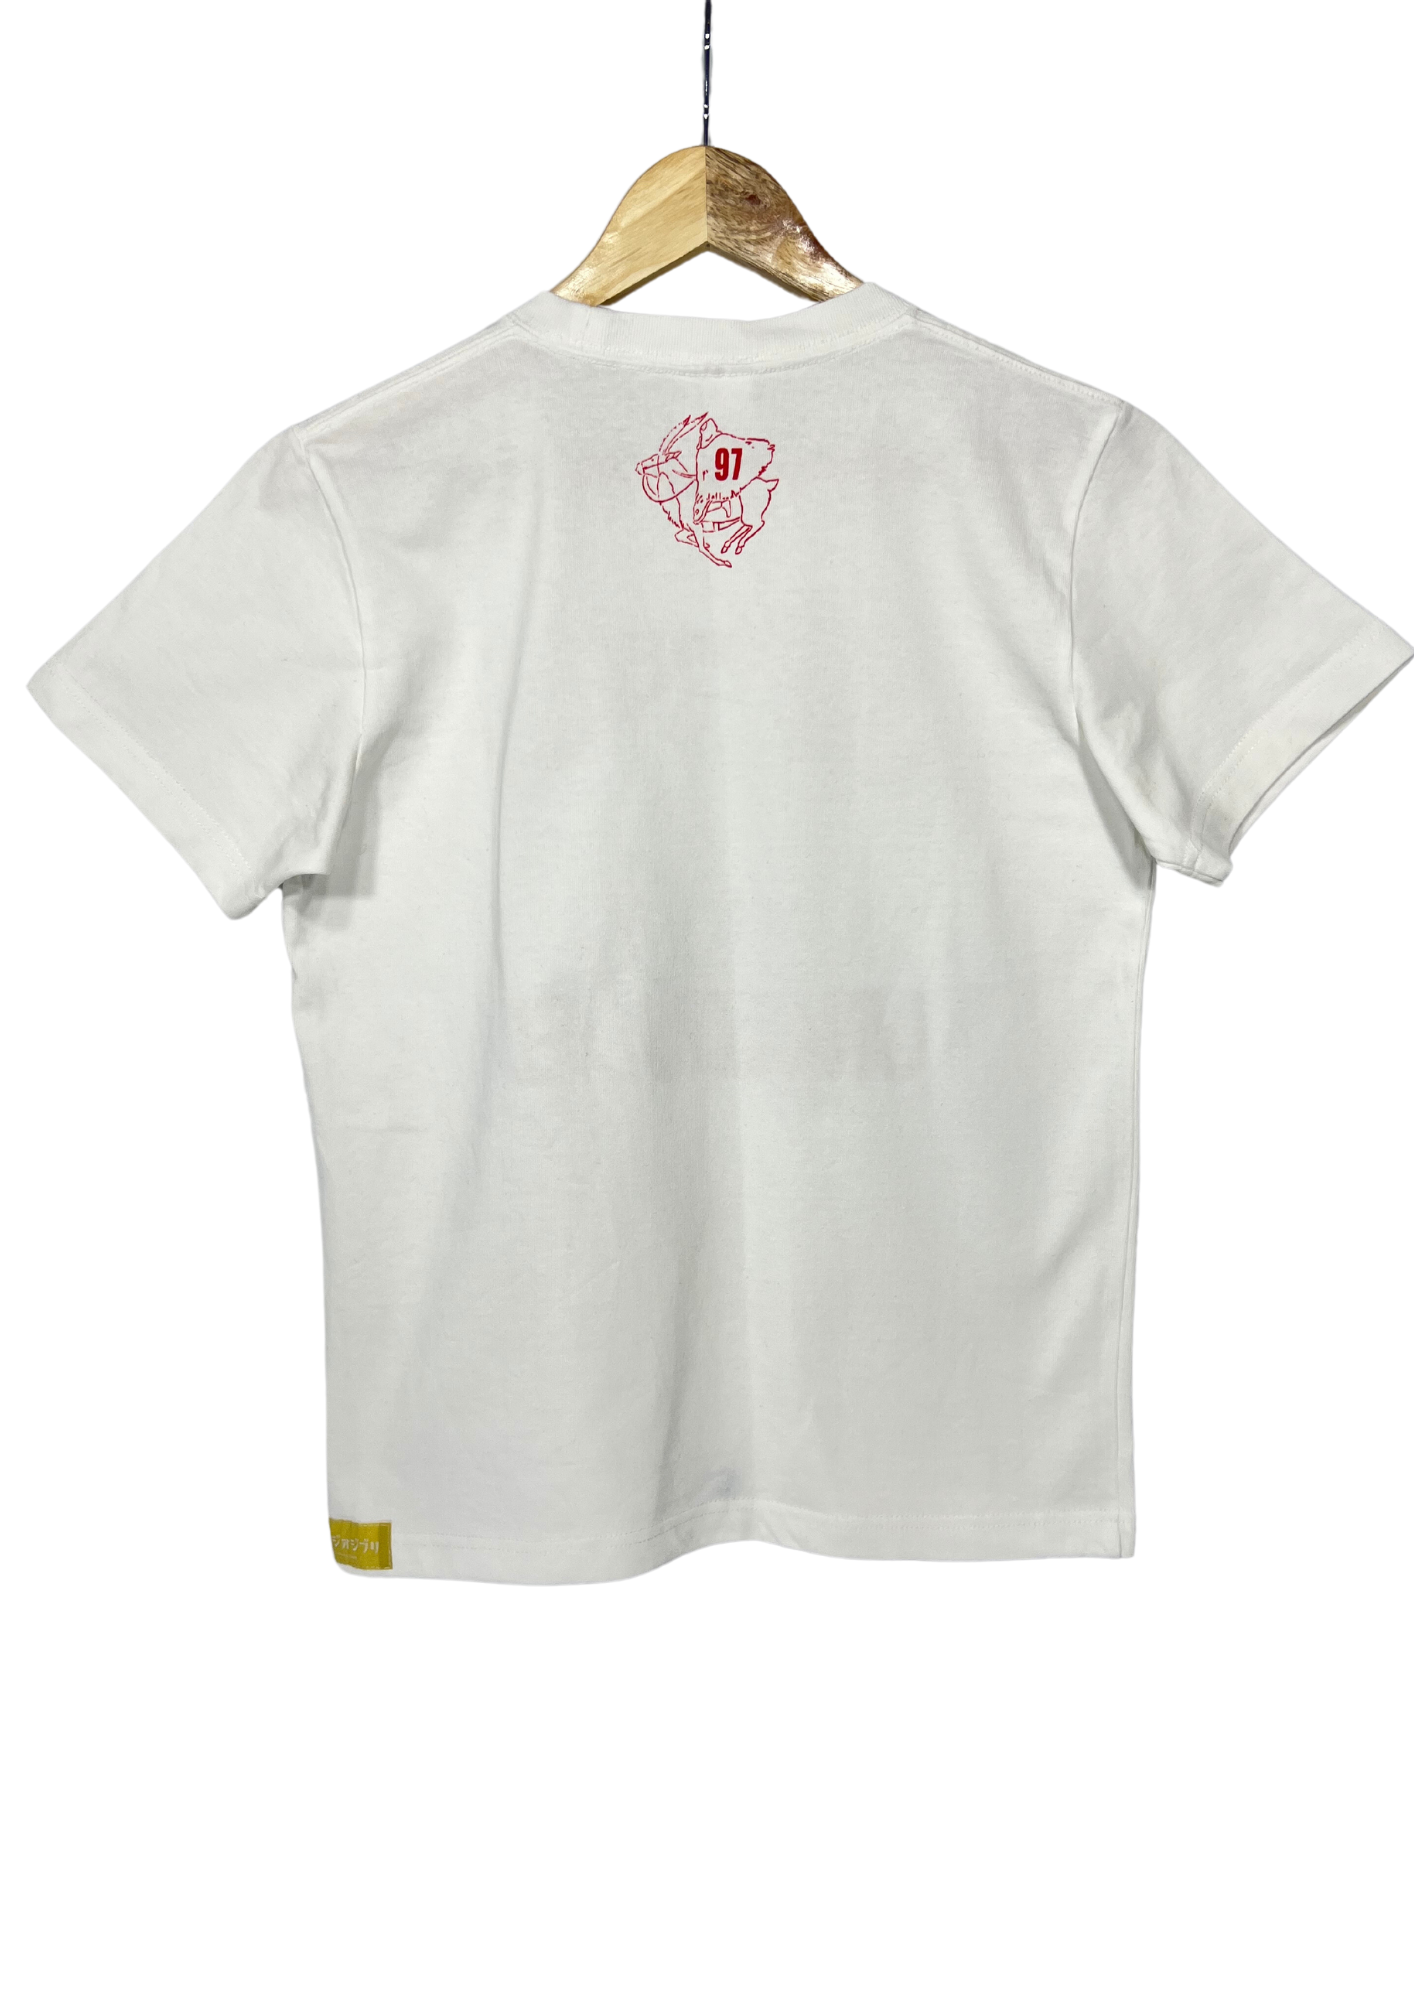 Princess Mononoke x GBL Ashitaka T-shirt